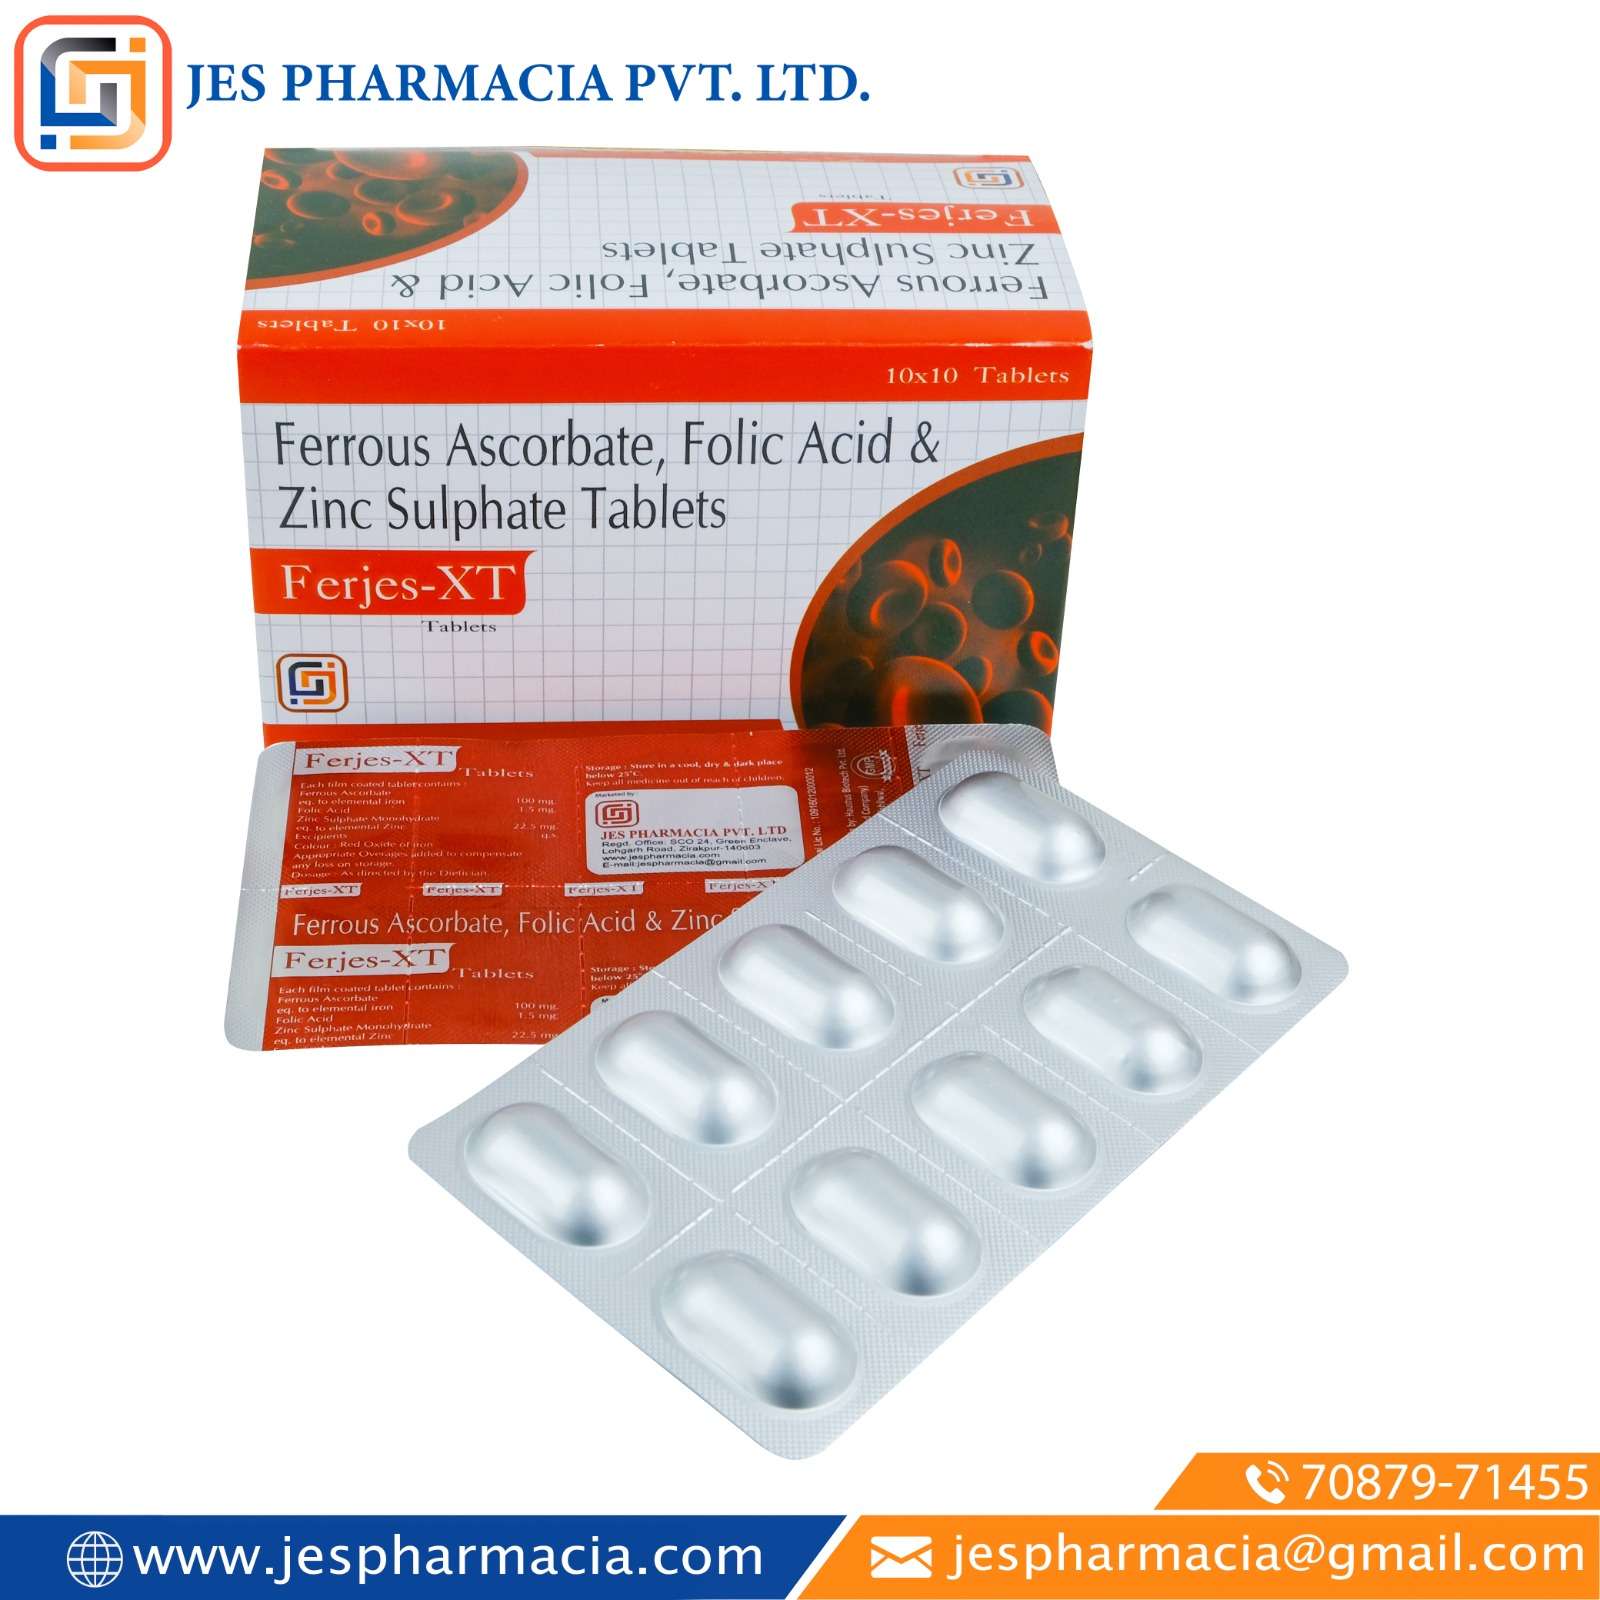 ferrousbis-glycinate 95 mg + folic acid 300 mcg + zinc sulphate 12 mg + cyanocobalamin 1 mcg tab